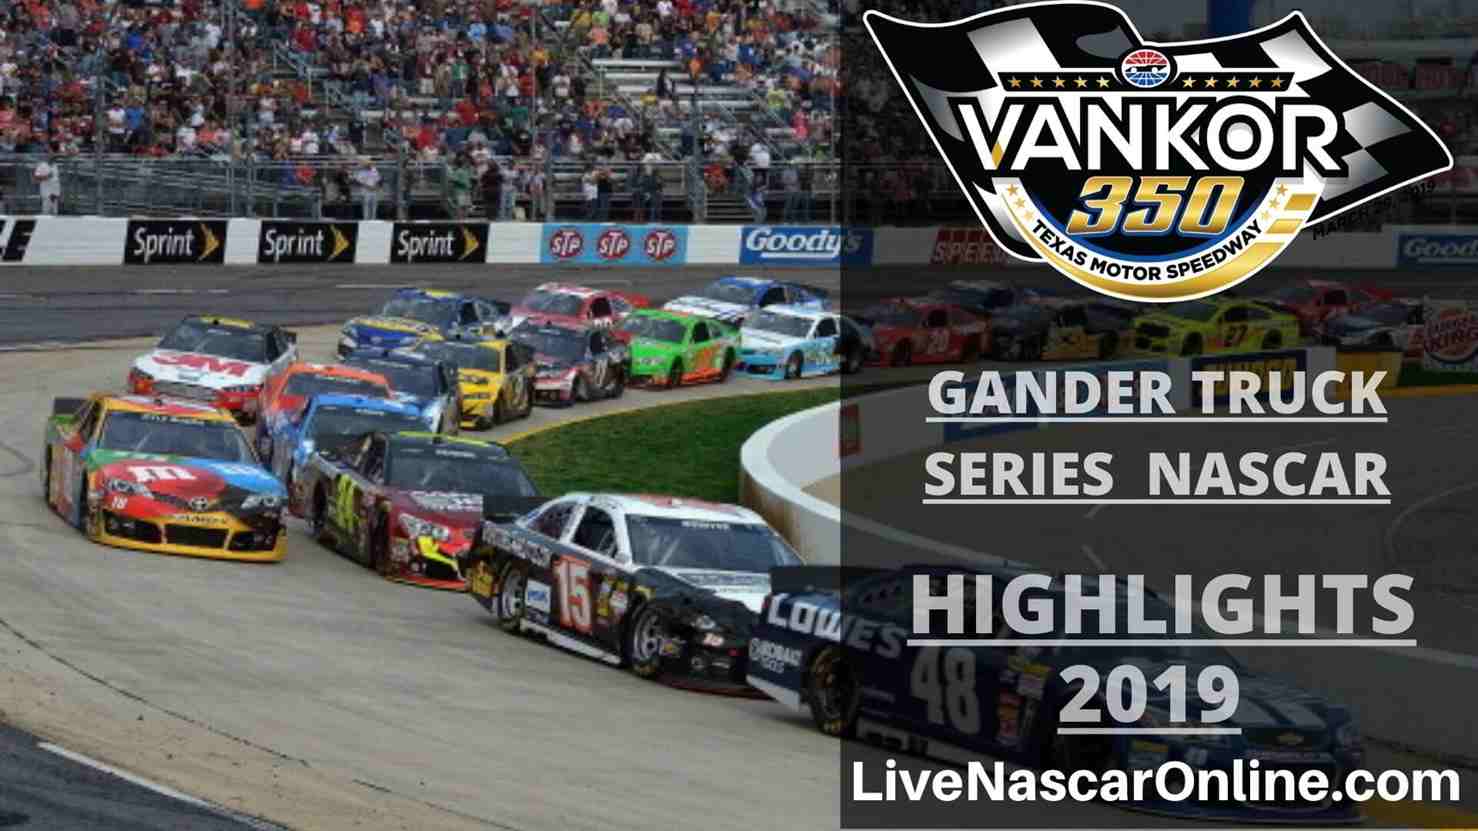 NASCAR Gander Truck Series VANKOR 350 Highlights 2019